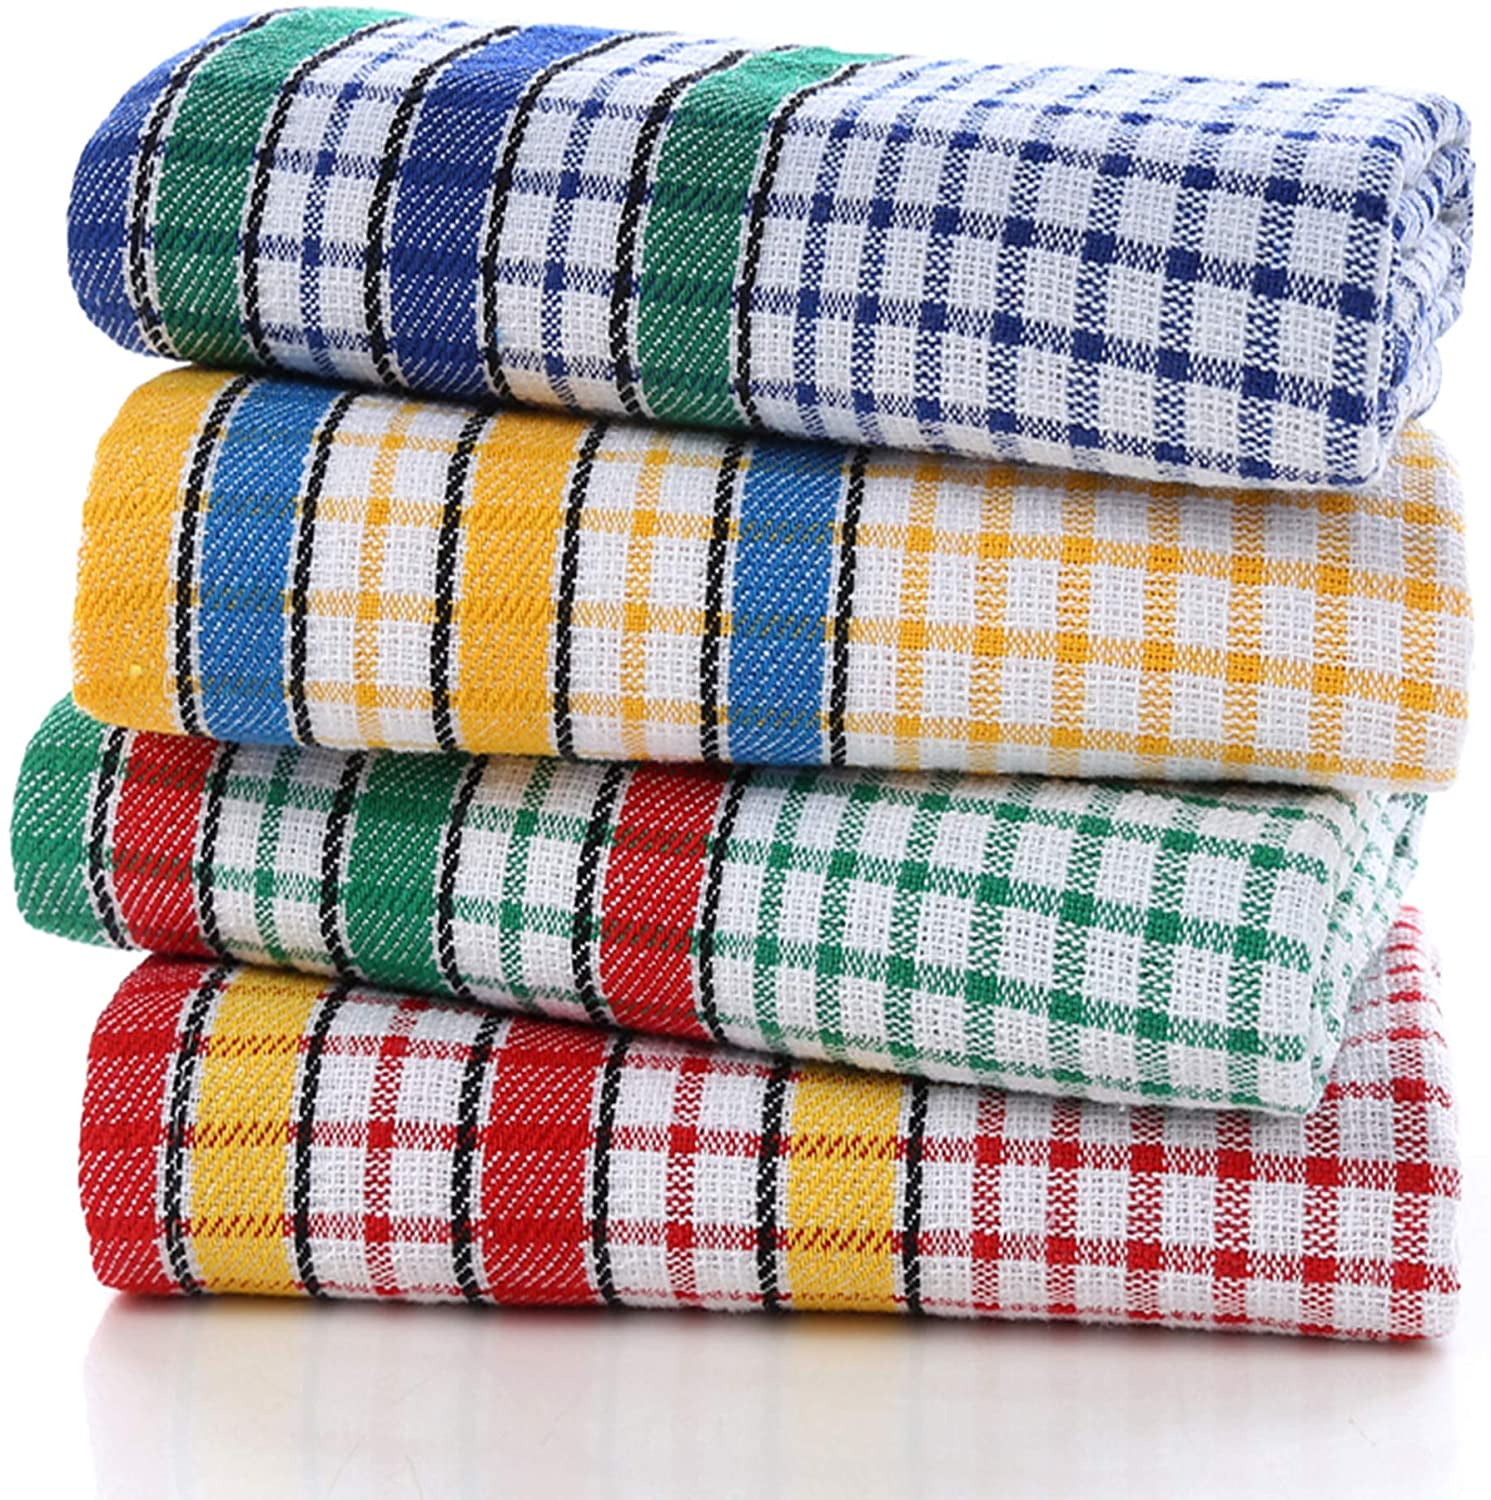 Kitchen Dish Towels, 16 Inch x 25 Inch Bulk Cotton Kitchen Towels